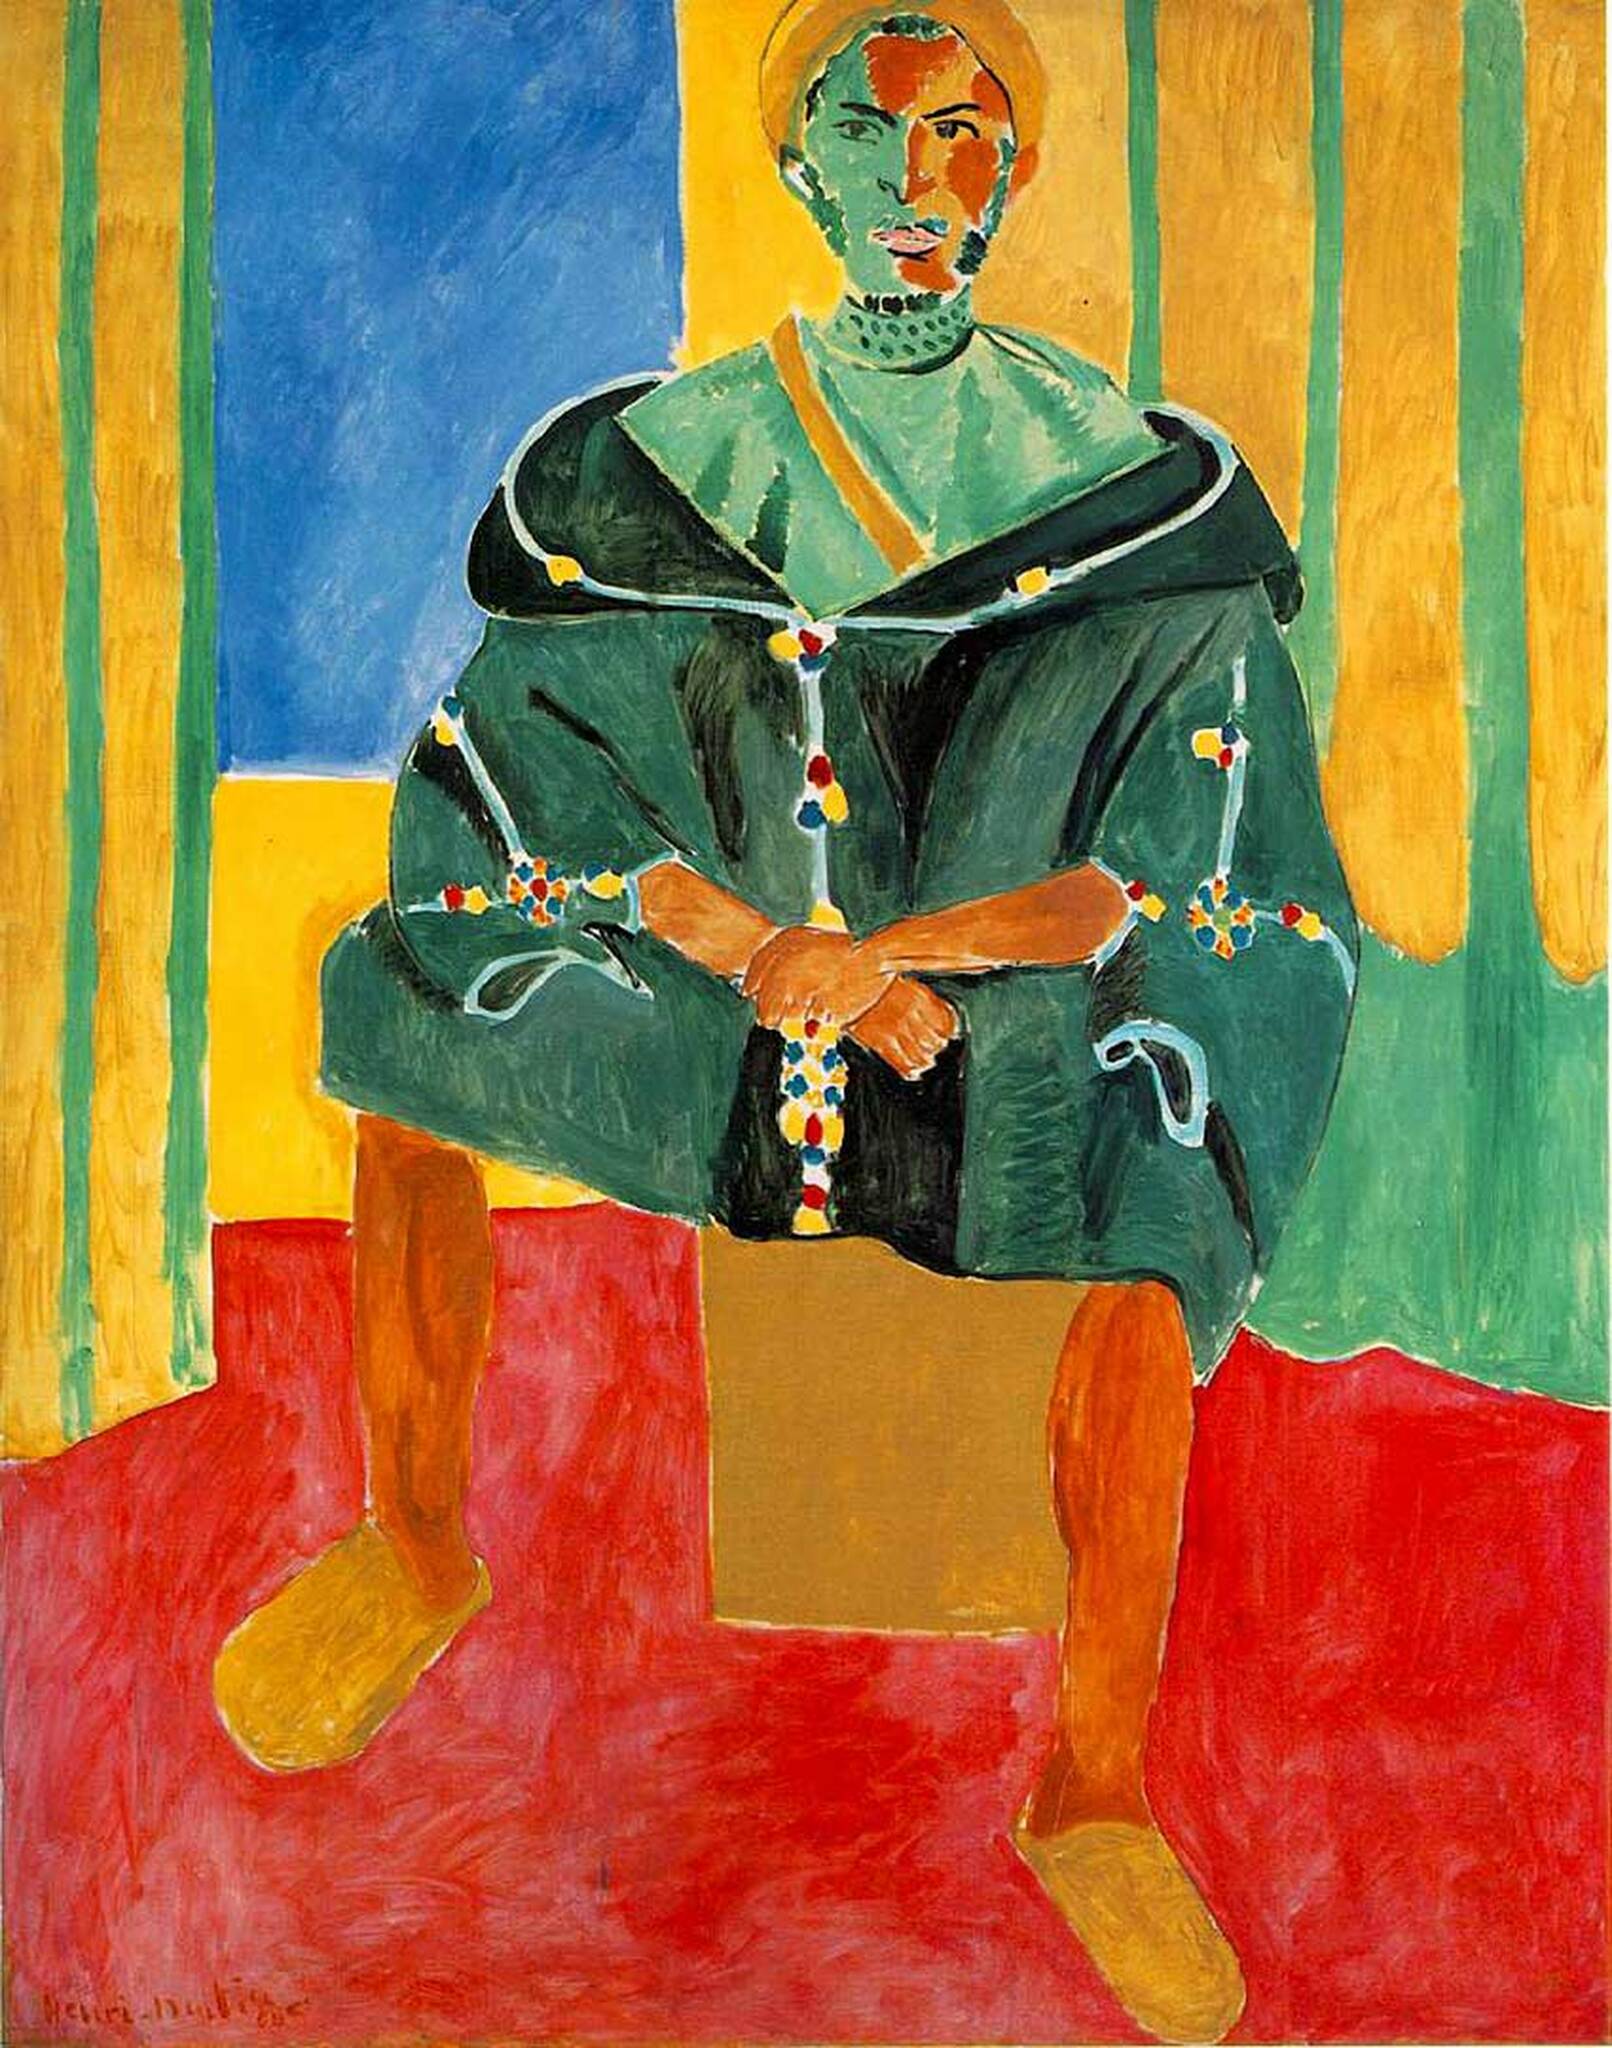 Биография и творчество Анри Матисса: талантливый французский художник